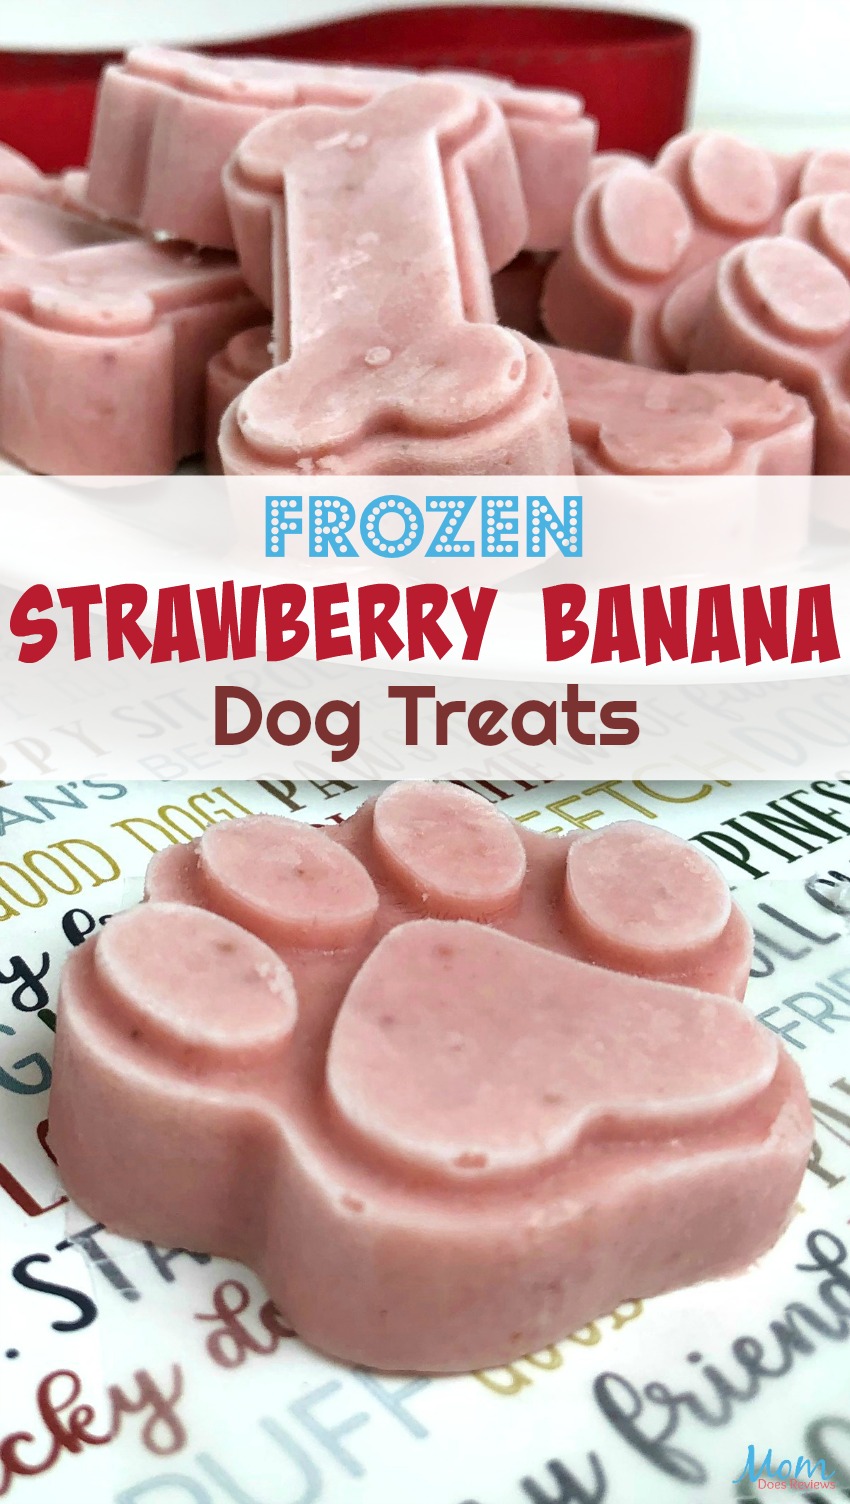 Strawberry Banana Dog Treats #recipe #dogs #treats #frozentreats #food #foodie #forpeopletoo